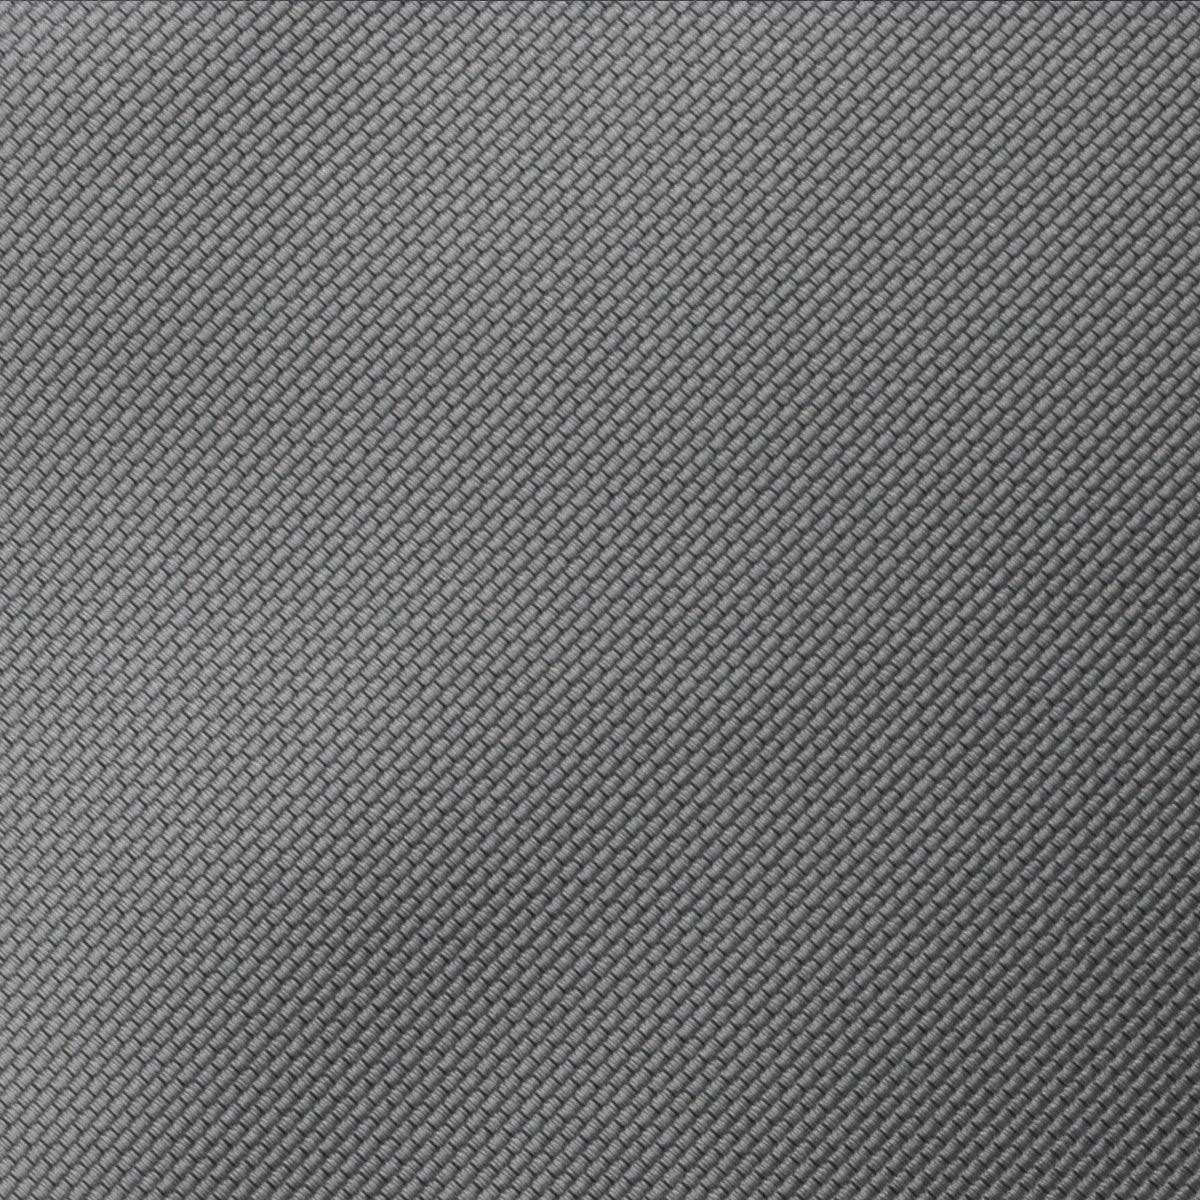 Mercury Grey Weave Pocket Square Fabric